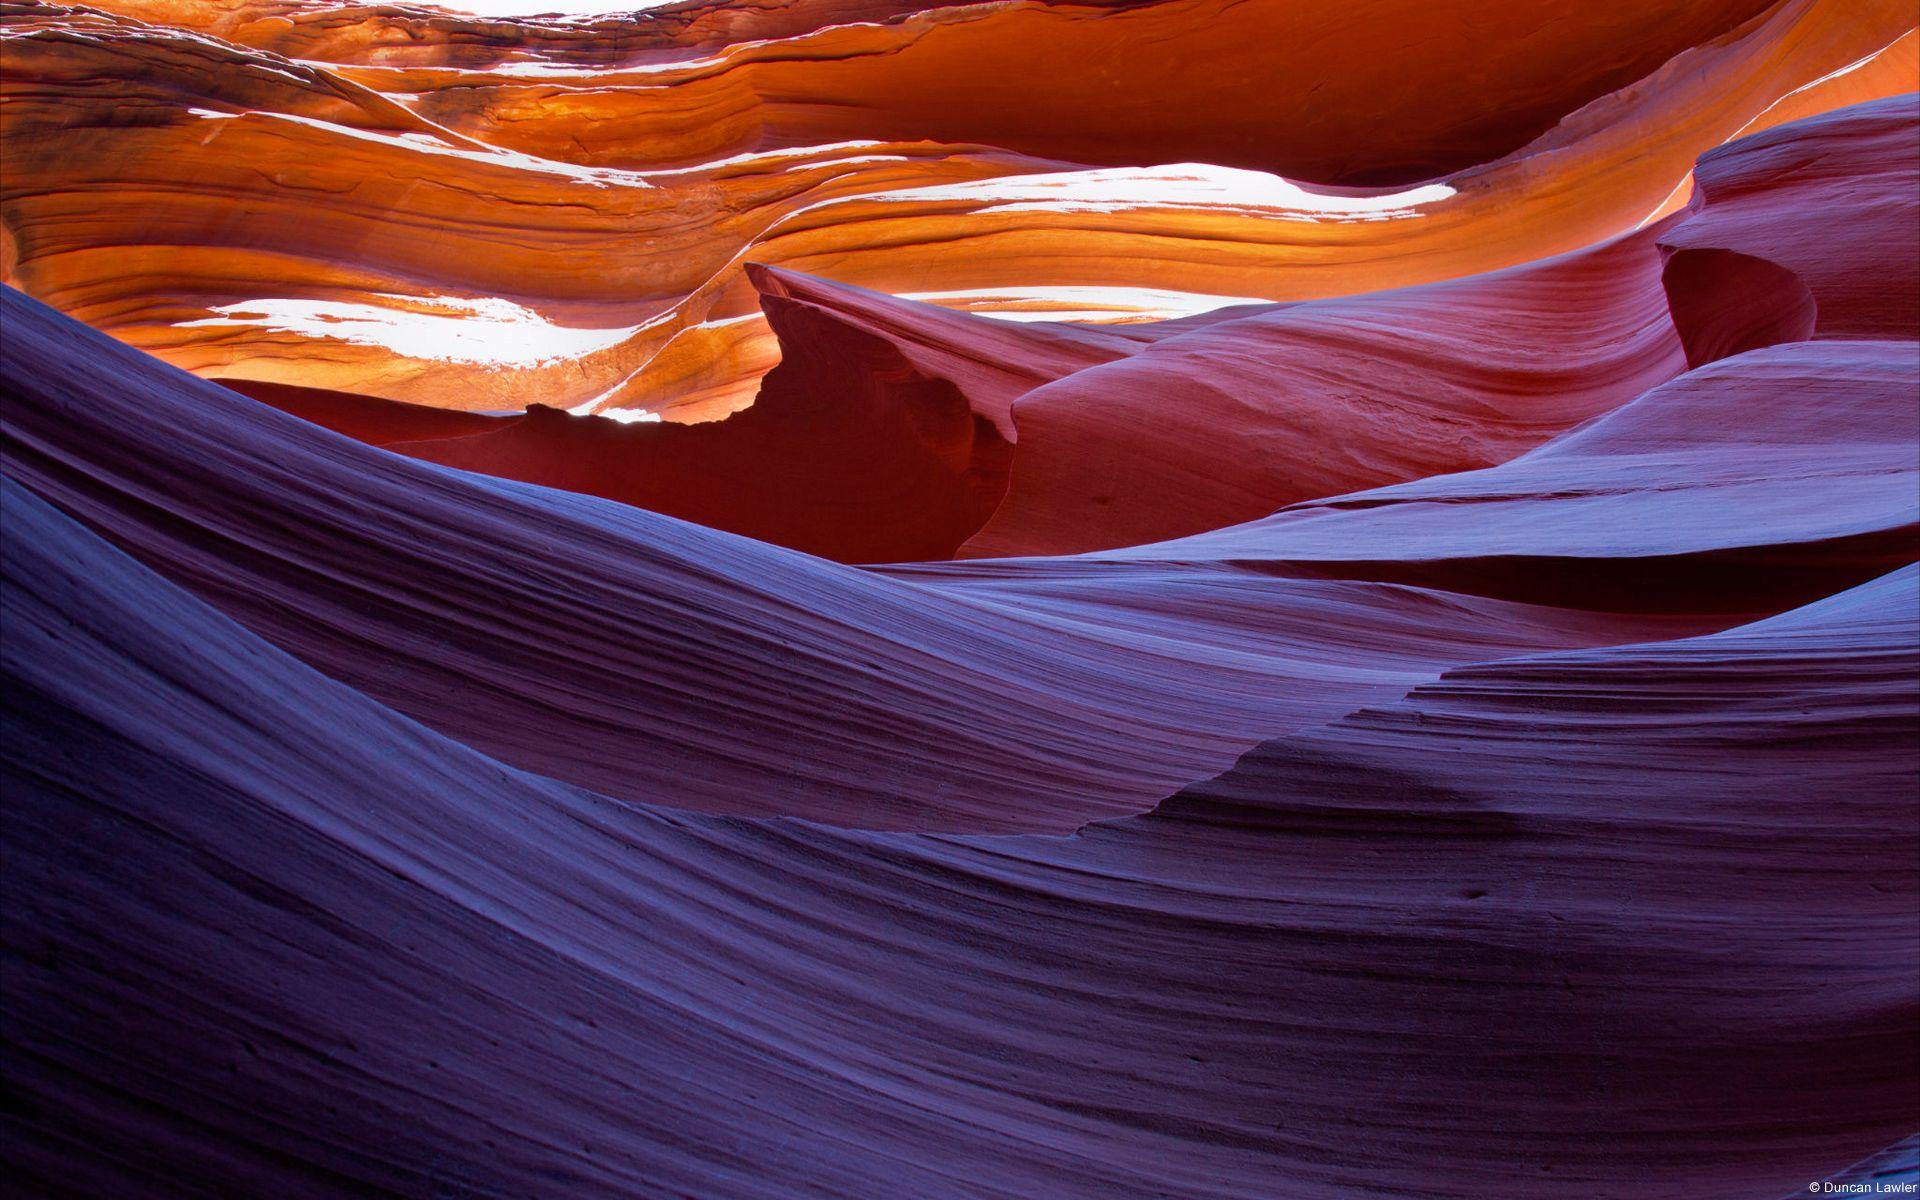 Sandstone Waves, Lower Antelope Canyon (Arizona, U.S.)